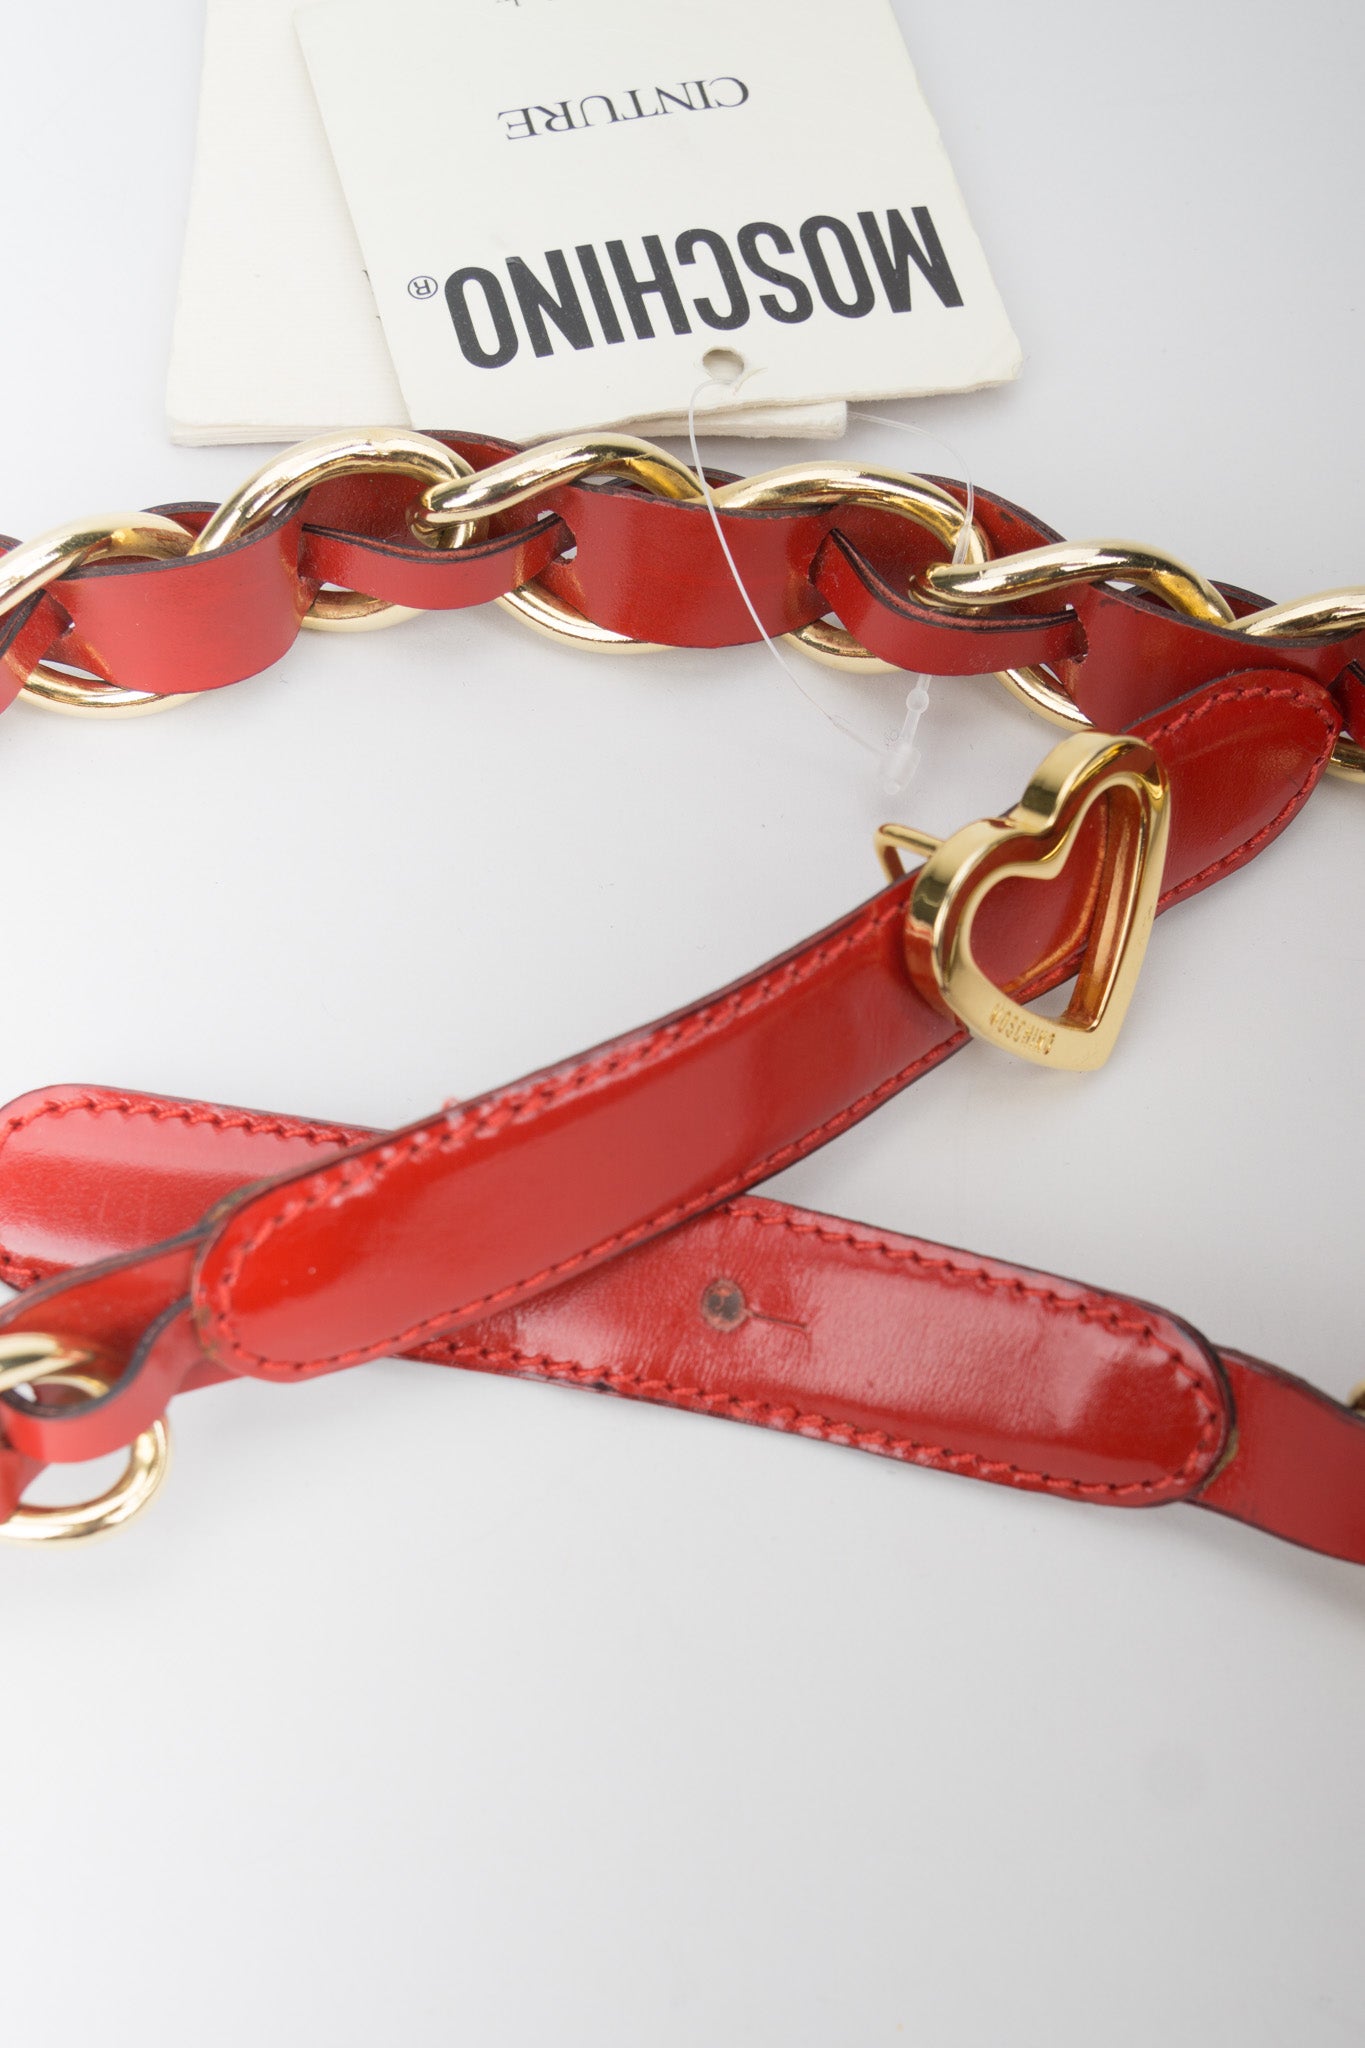 Moschino Cherry Red Patent Leather Braid Heart Chain Belt